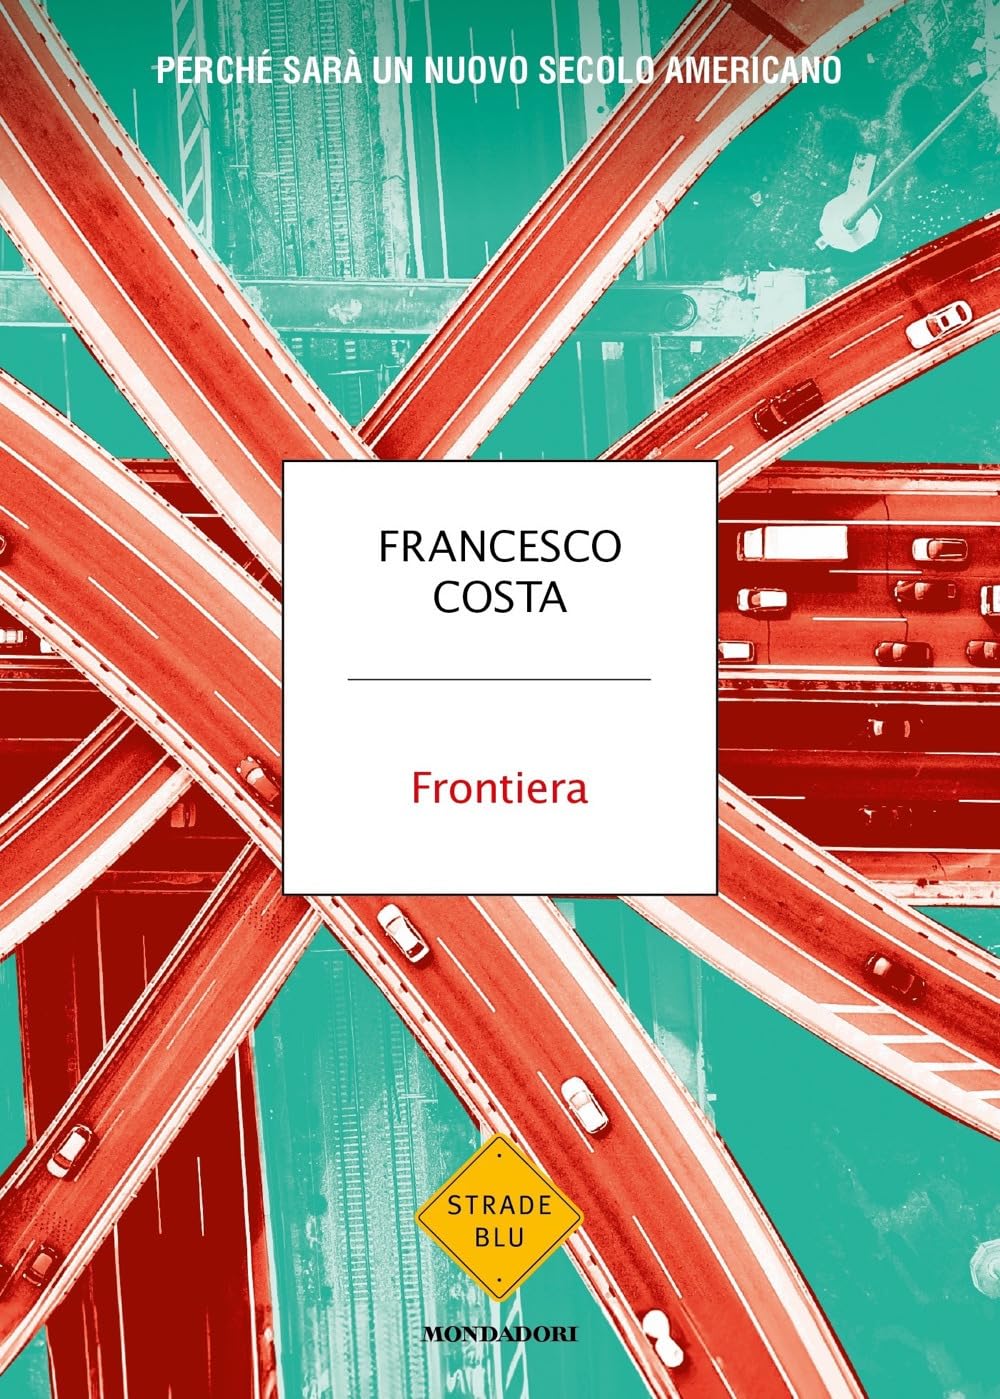 Francesco Costa: Frontiera (Italiano language, Mondadori)